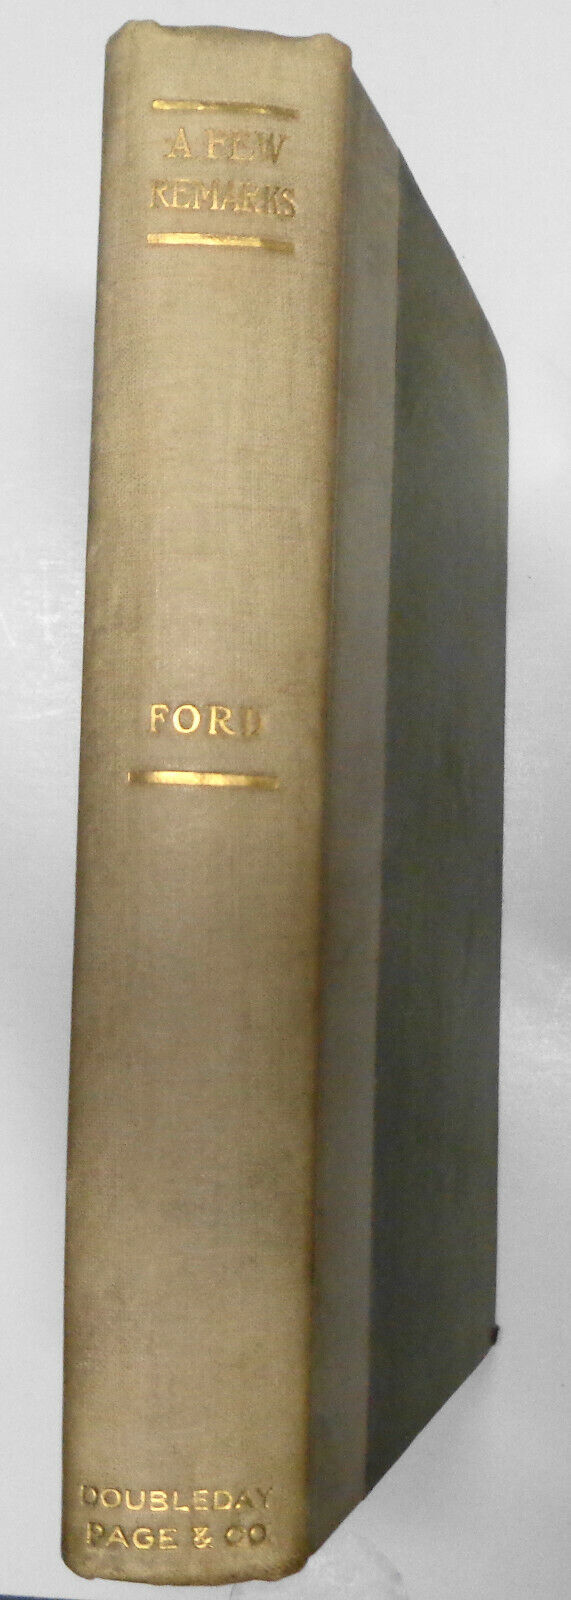 A Few Remarks, by Simeon Ford. 1903. Special presentation edition.